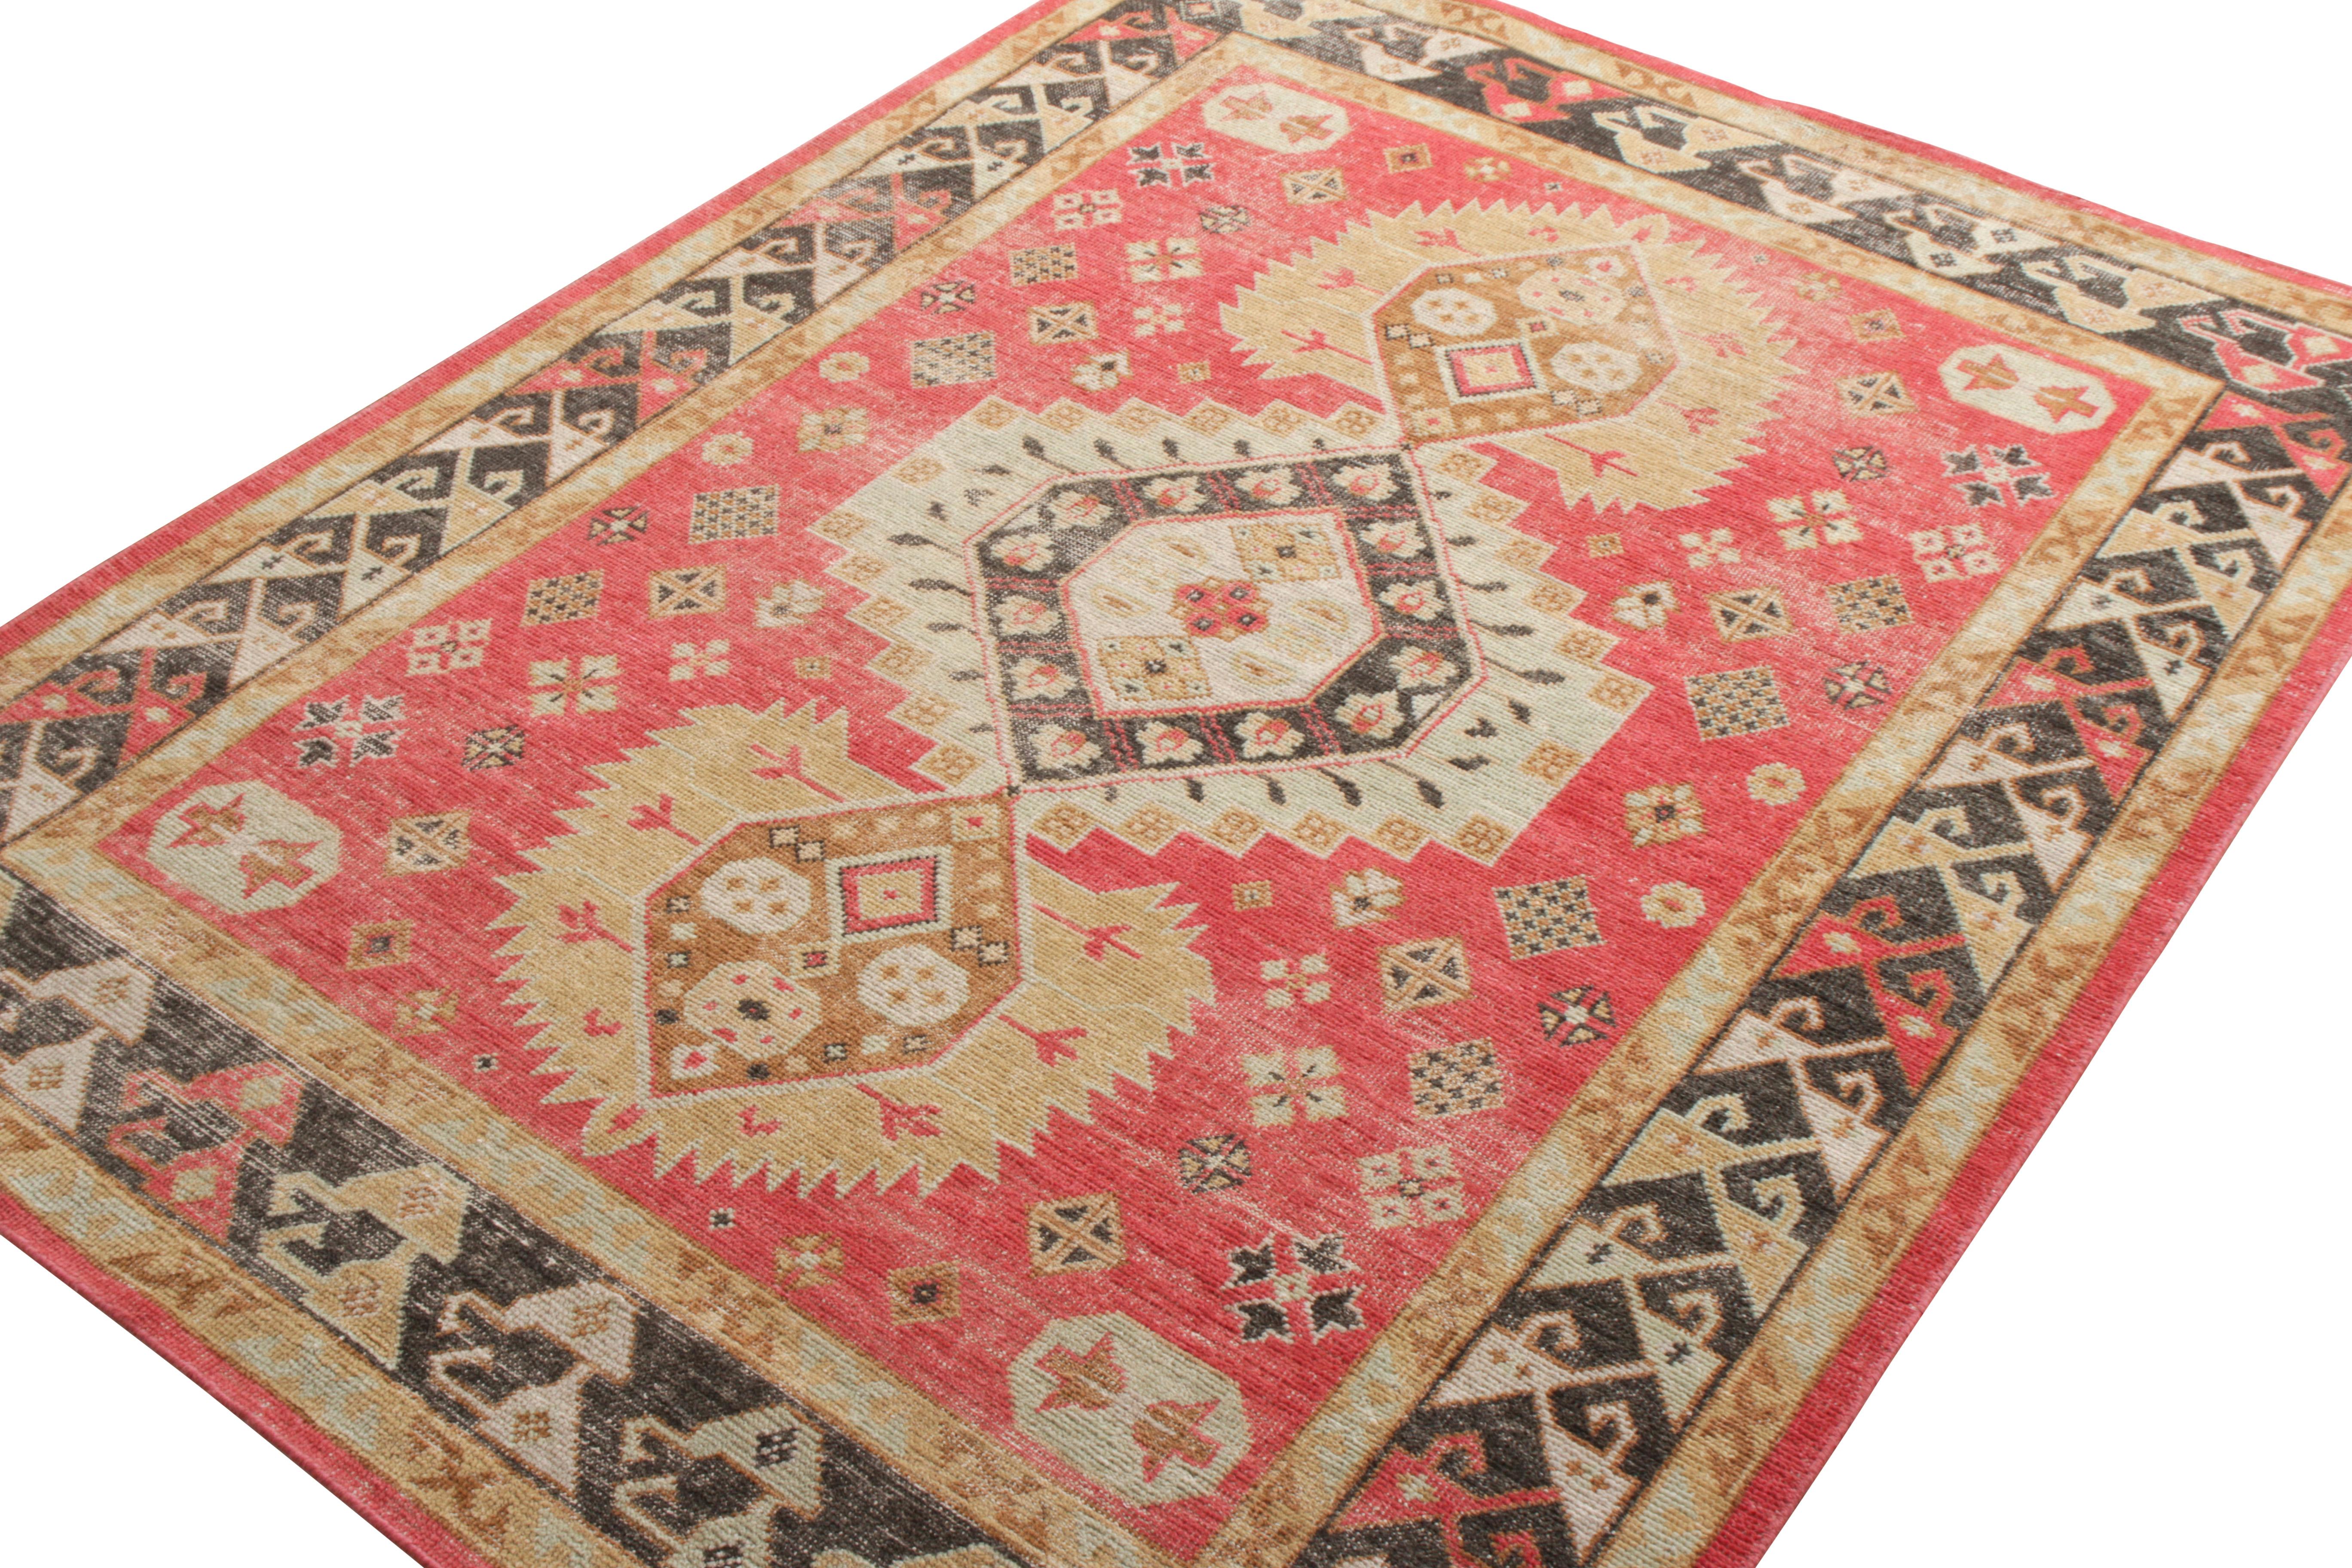 Rug & Kilim's Distressed Classic Style Teppich in Rot, Beige-Braun Medaillon-Muster (Stammeskunst) im Angebot